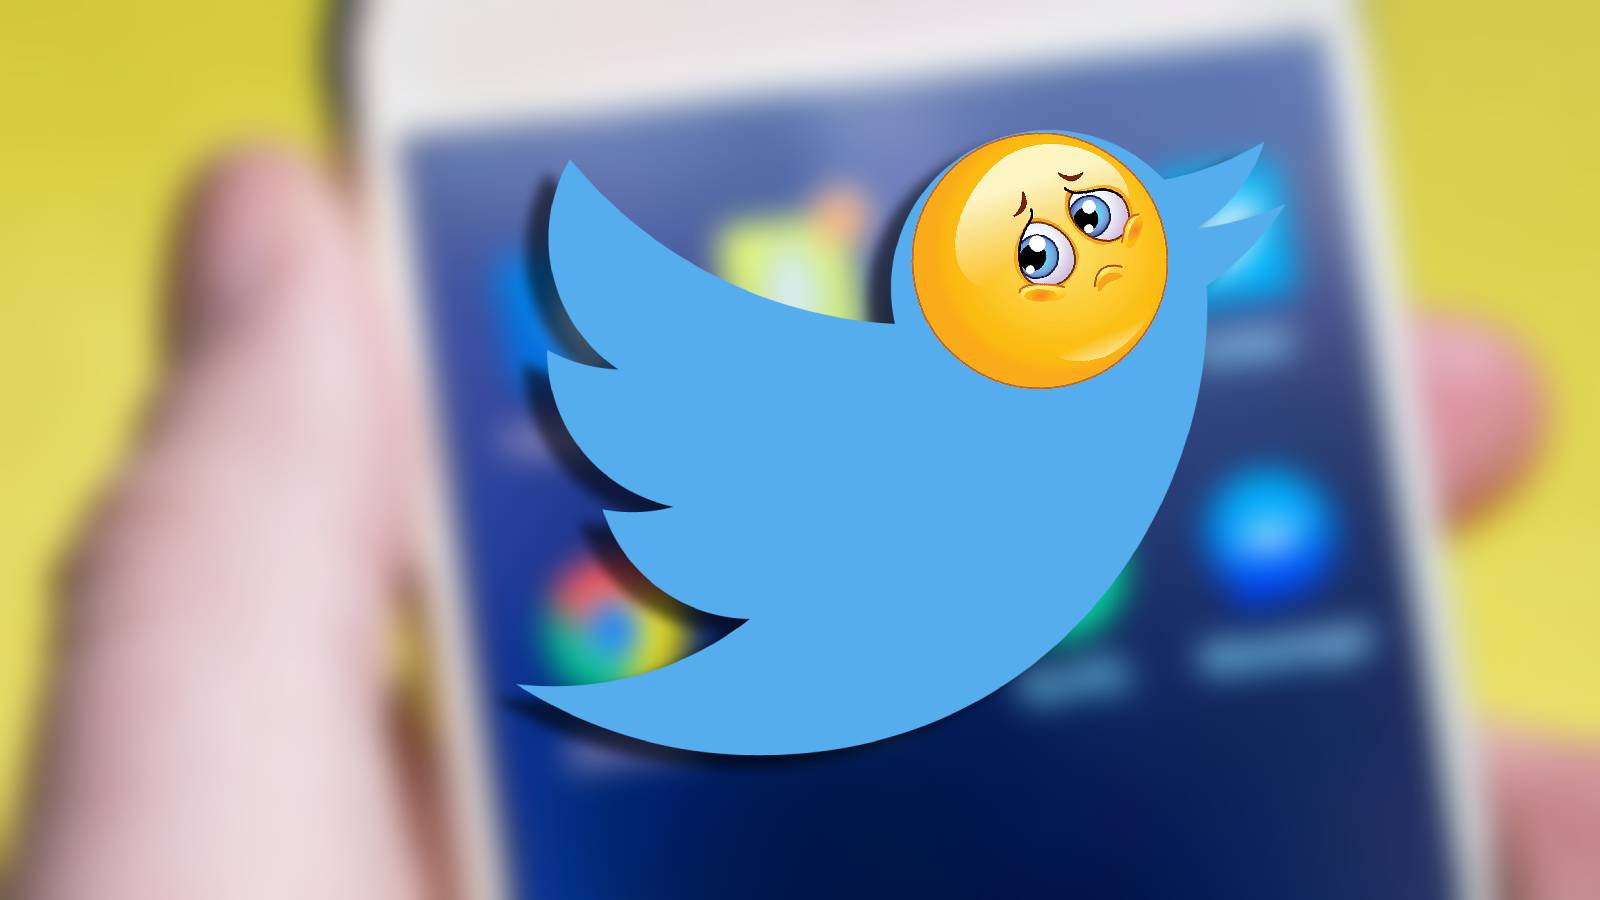 old twitter logo with sad emoji